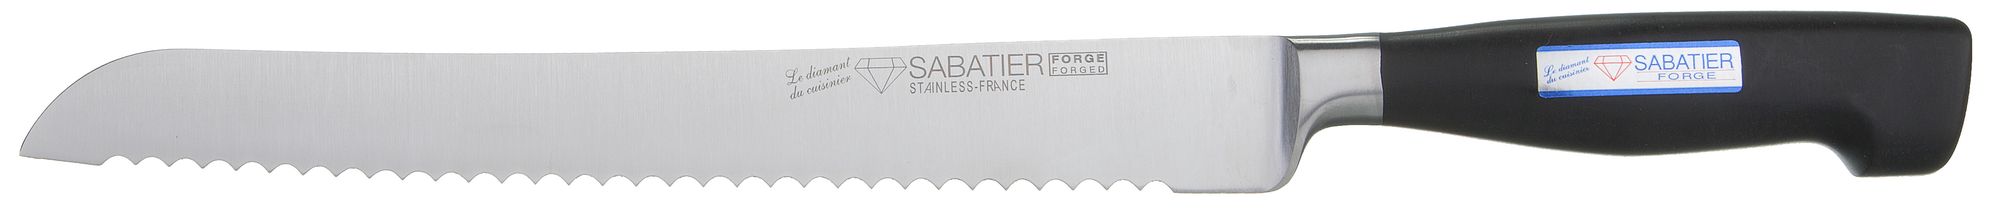 Diamond Sabatier Bread Knife Forge 22 cm